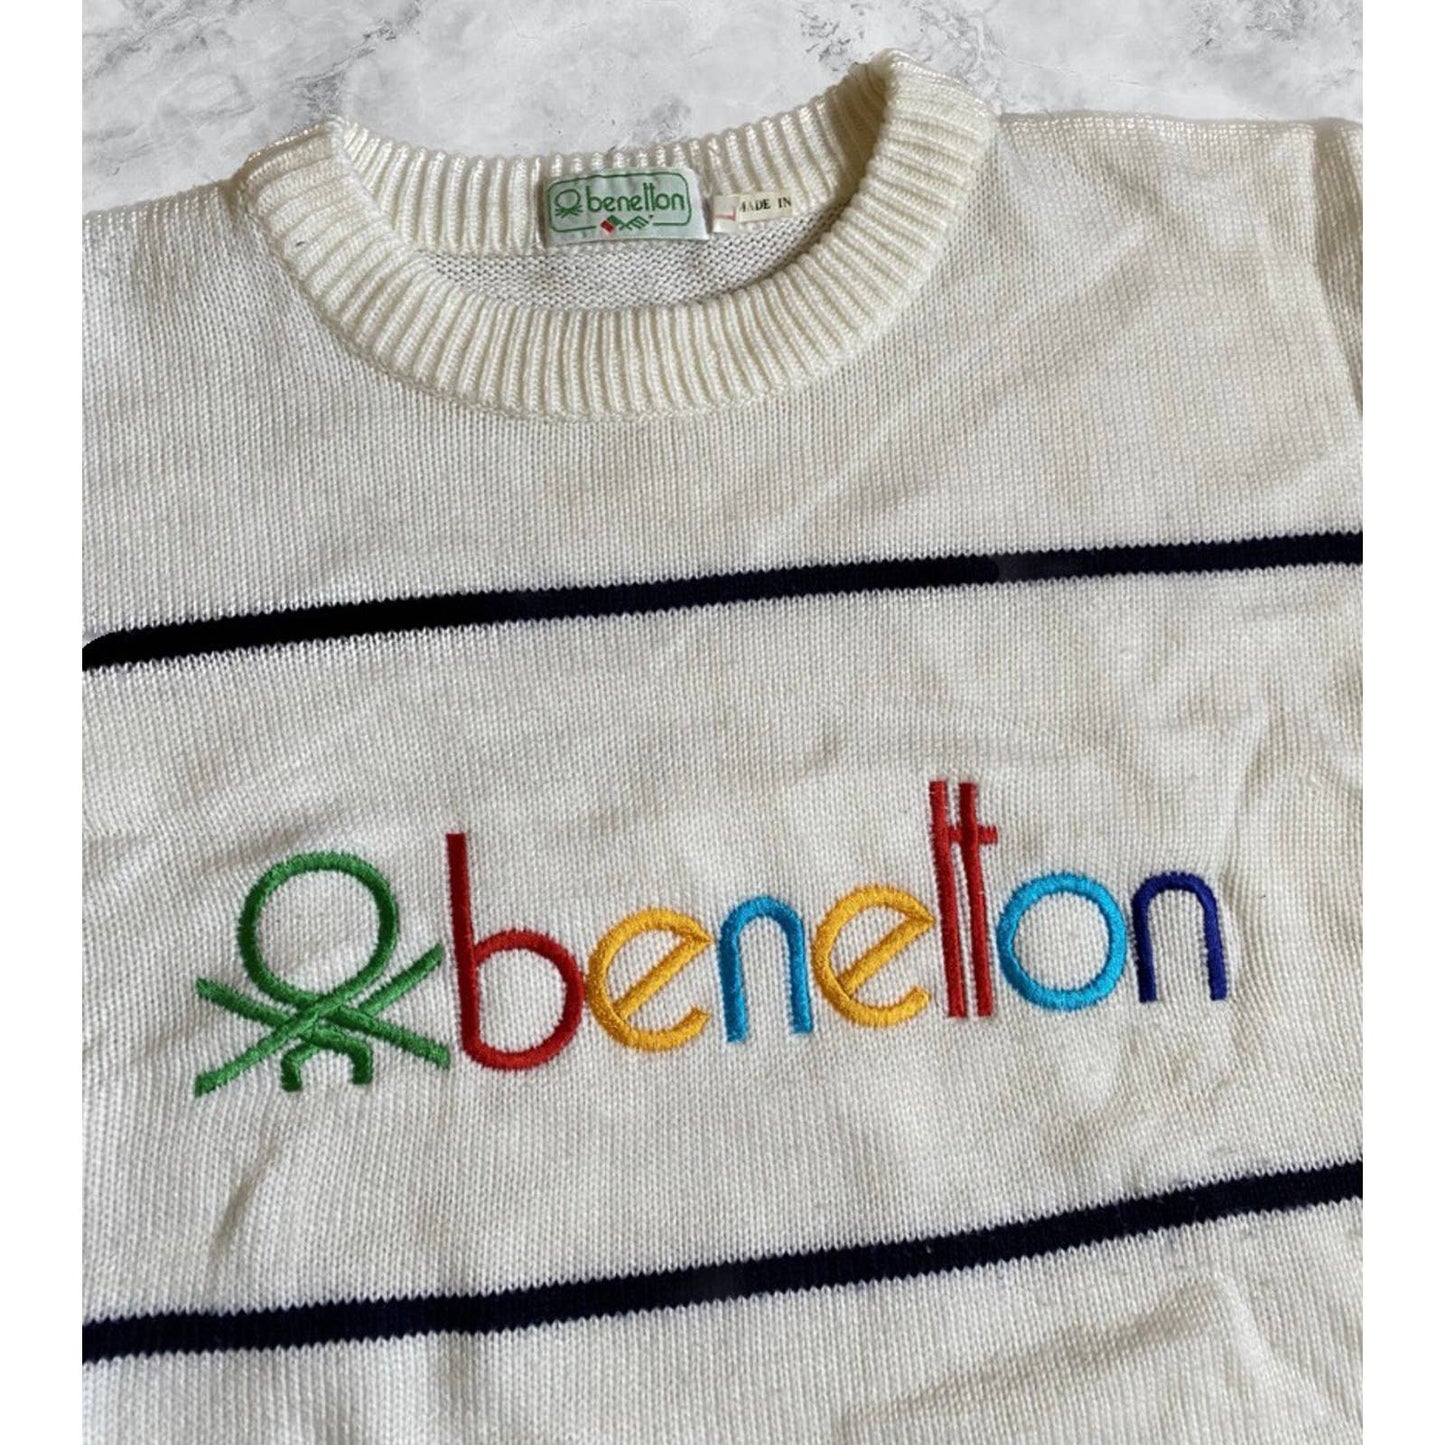 Benetton vintage sweater big logo multicolor united colors